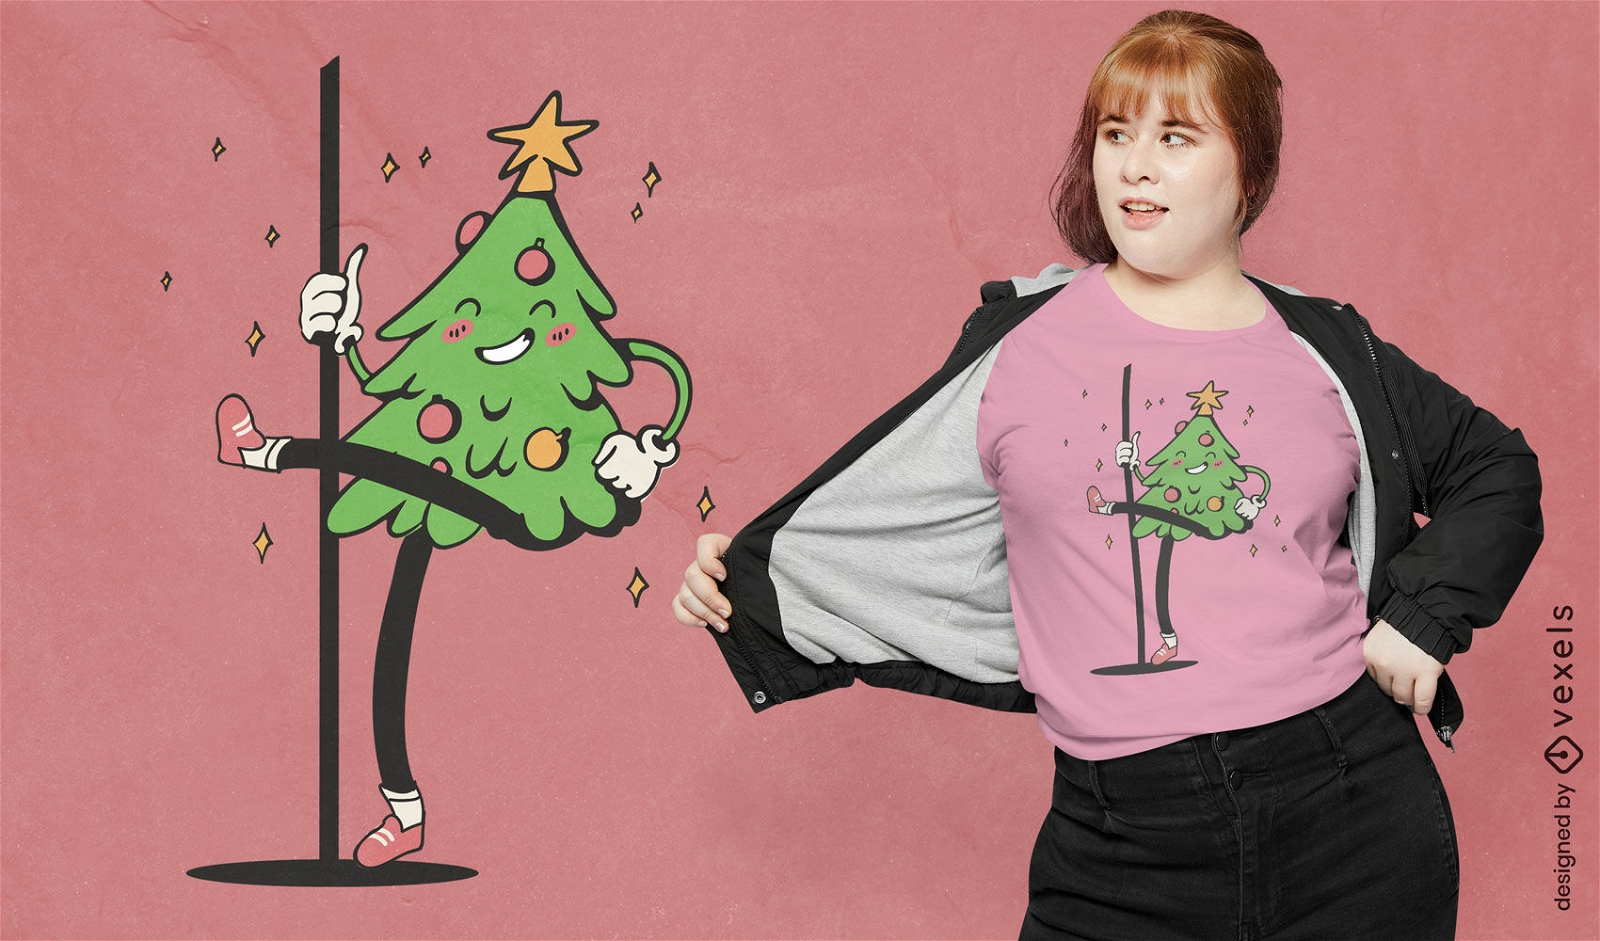 Festive Christmas tree pole dance t-shirt design